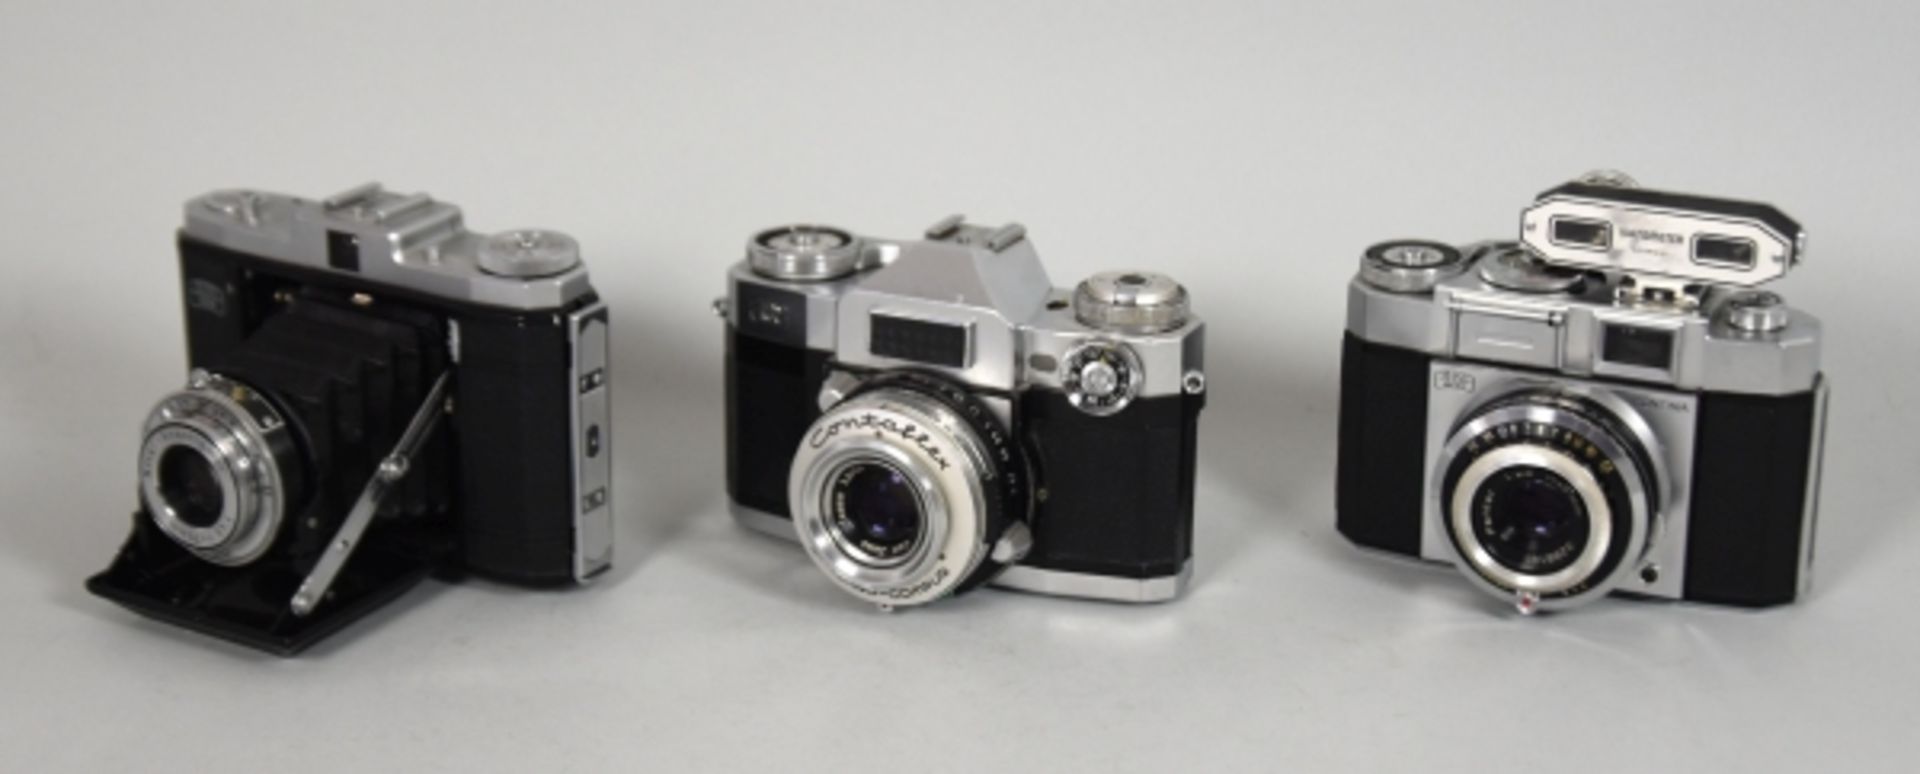 ZEISS-IKON Konvolut aus 3 Fotoapparaten, Contaxflex Sup, Nr. X52487, Bj. ca. 1960, Objektiv